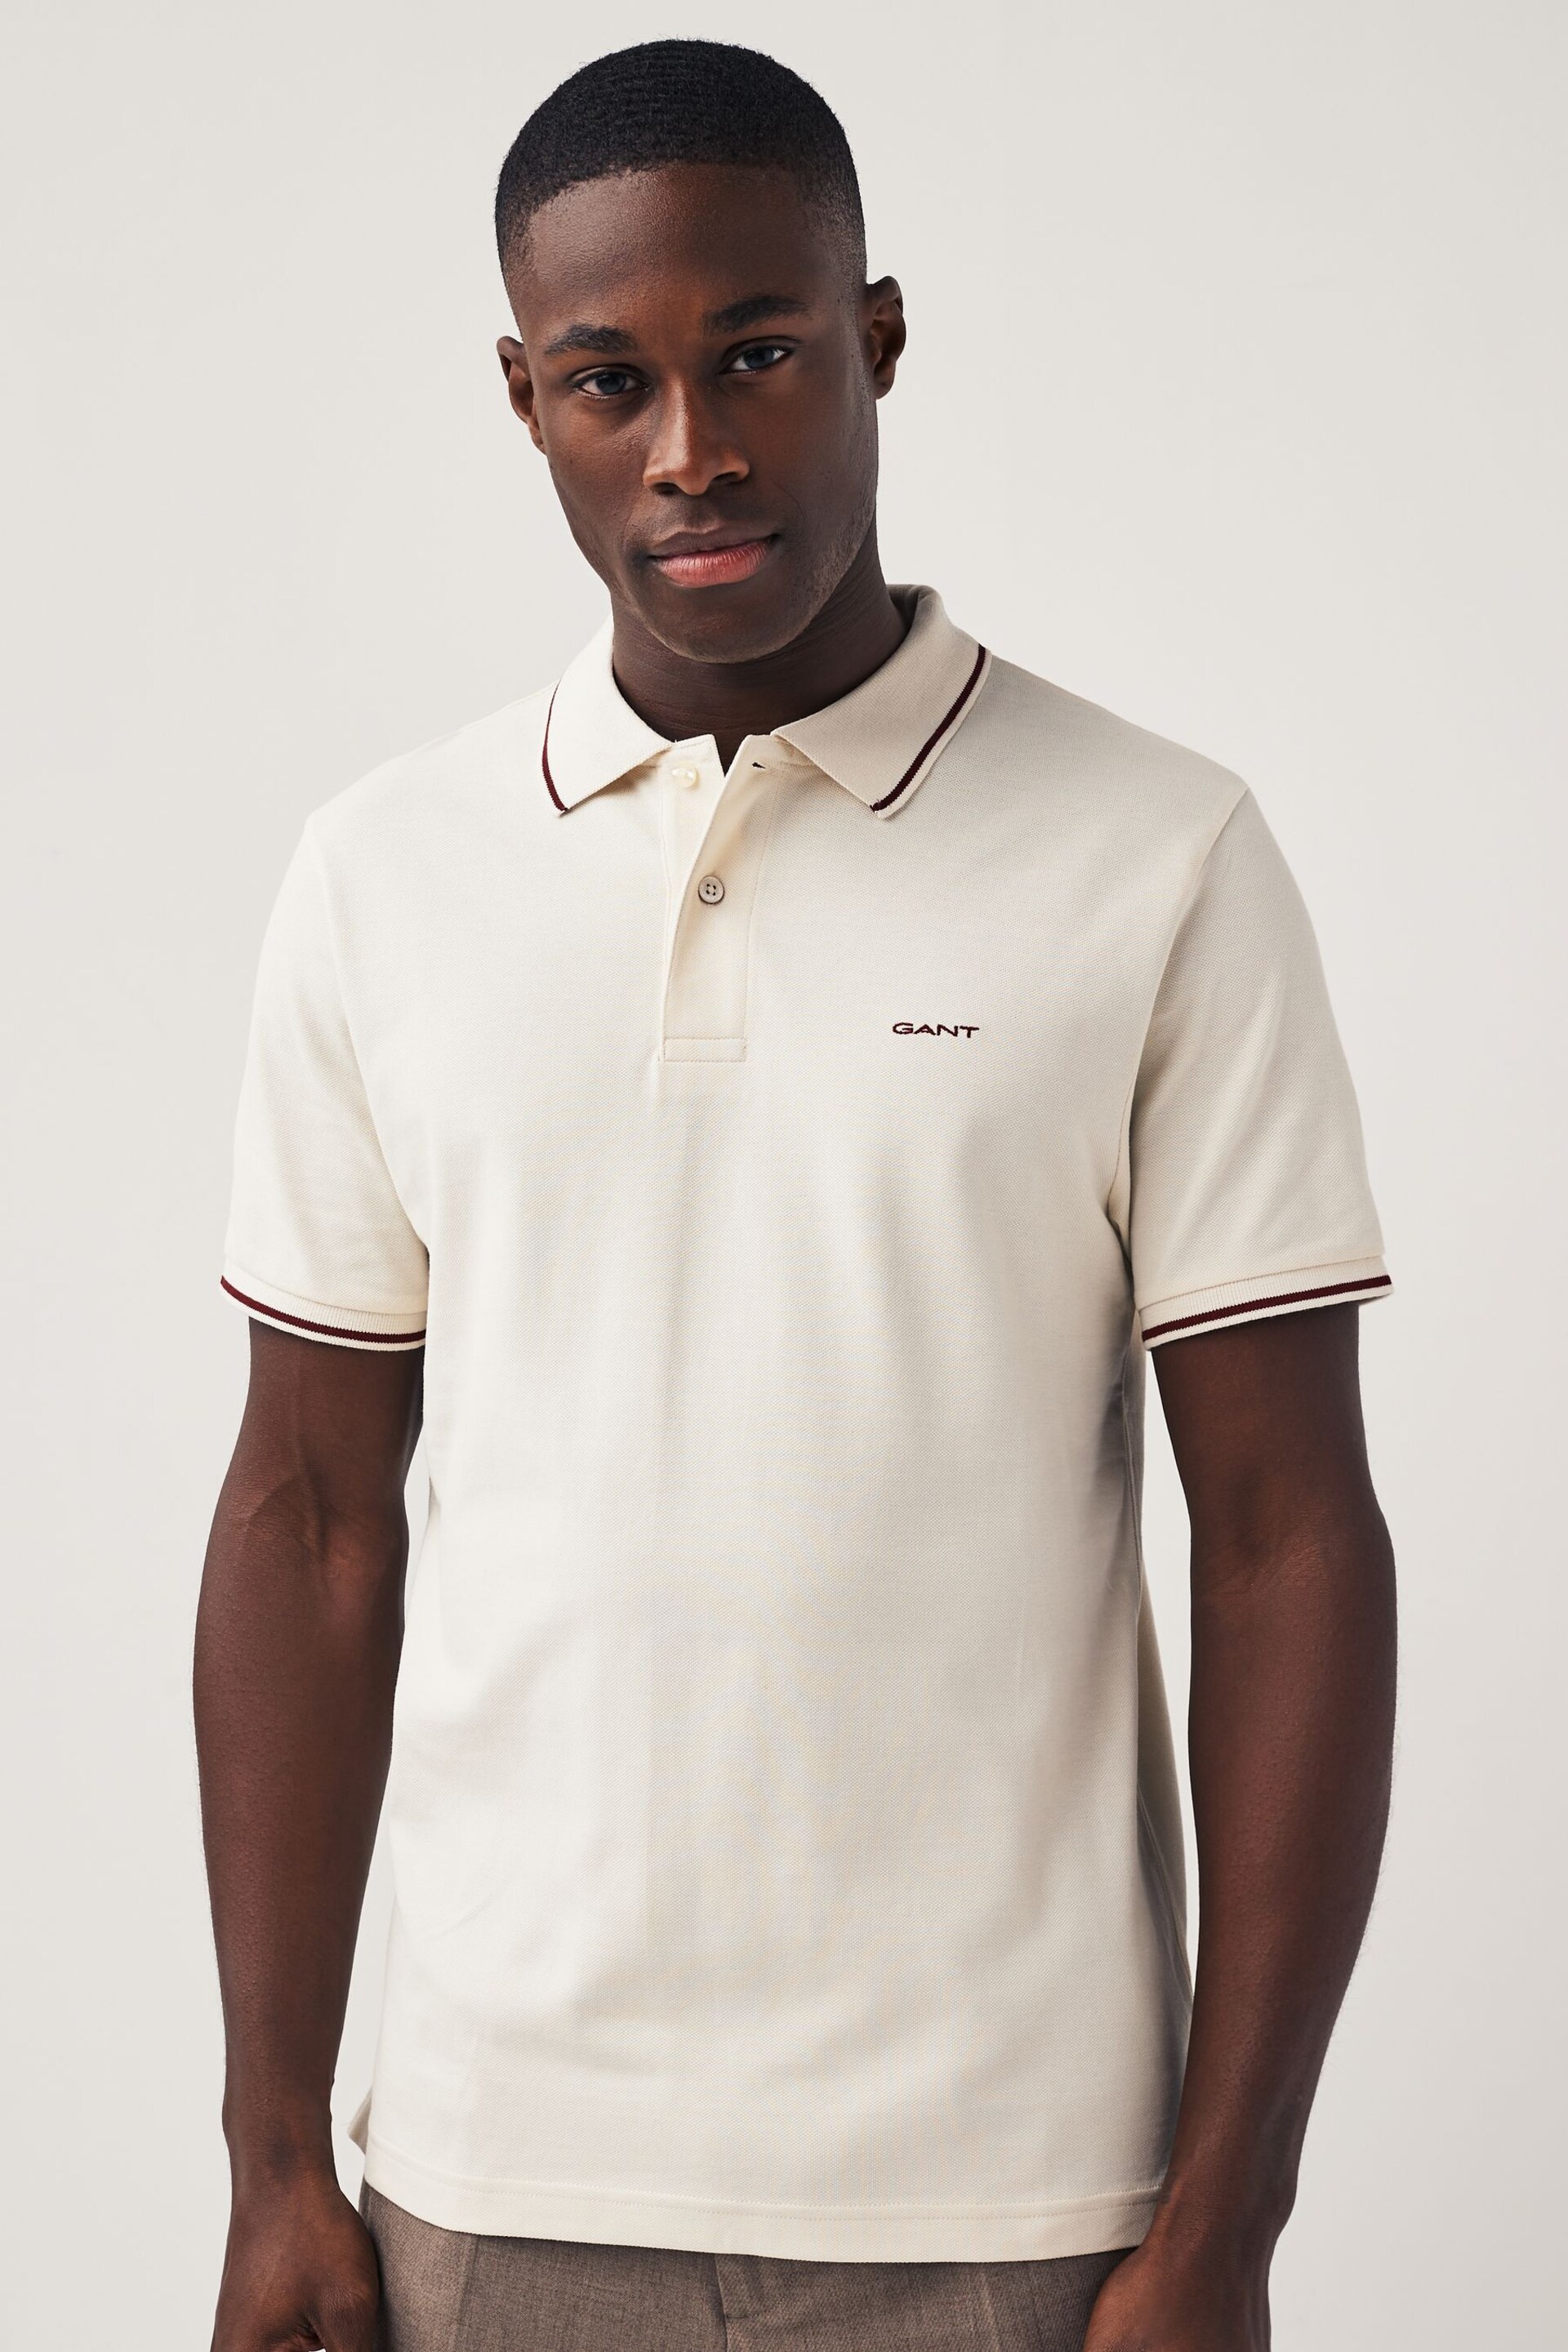 GANT Cream Tipped Piqué Polo Shirt - Image 1 of 3